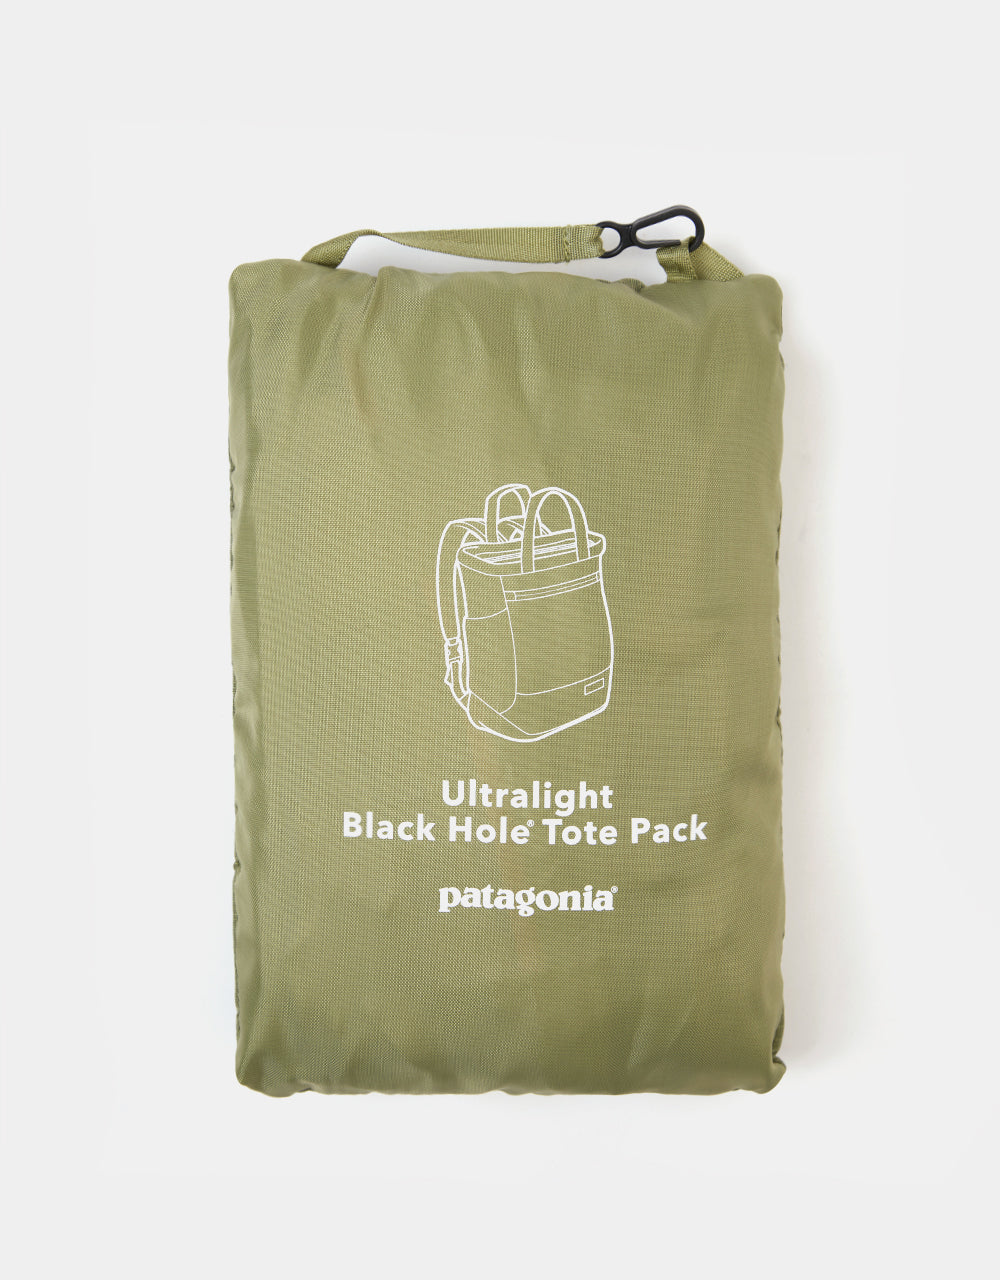 Patagonia Ultralight Black Hole Tote Pack - Buckhorn Green